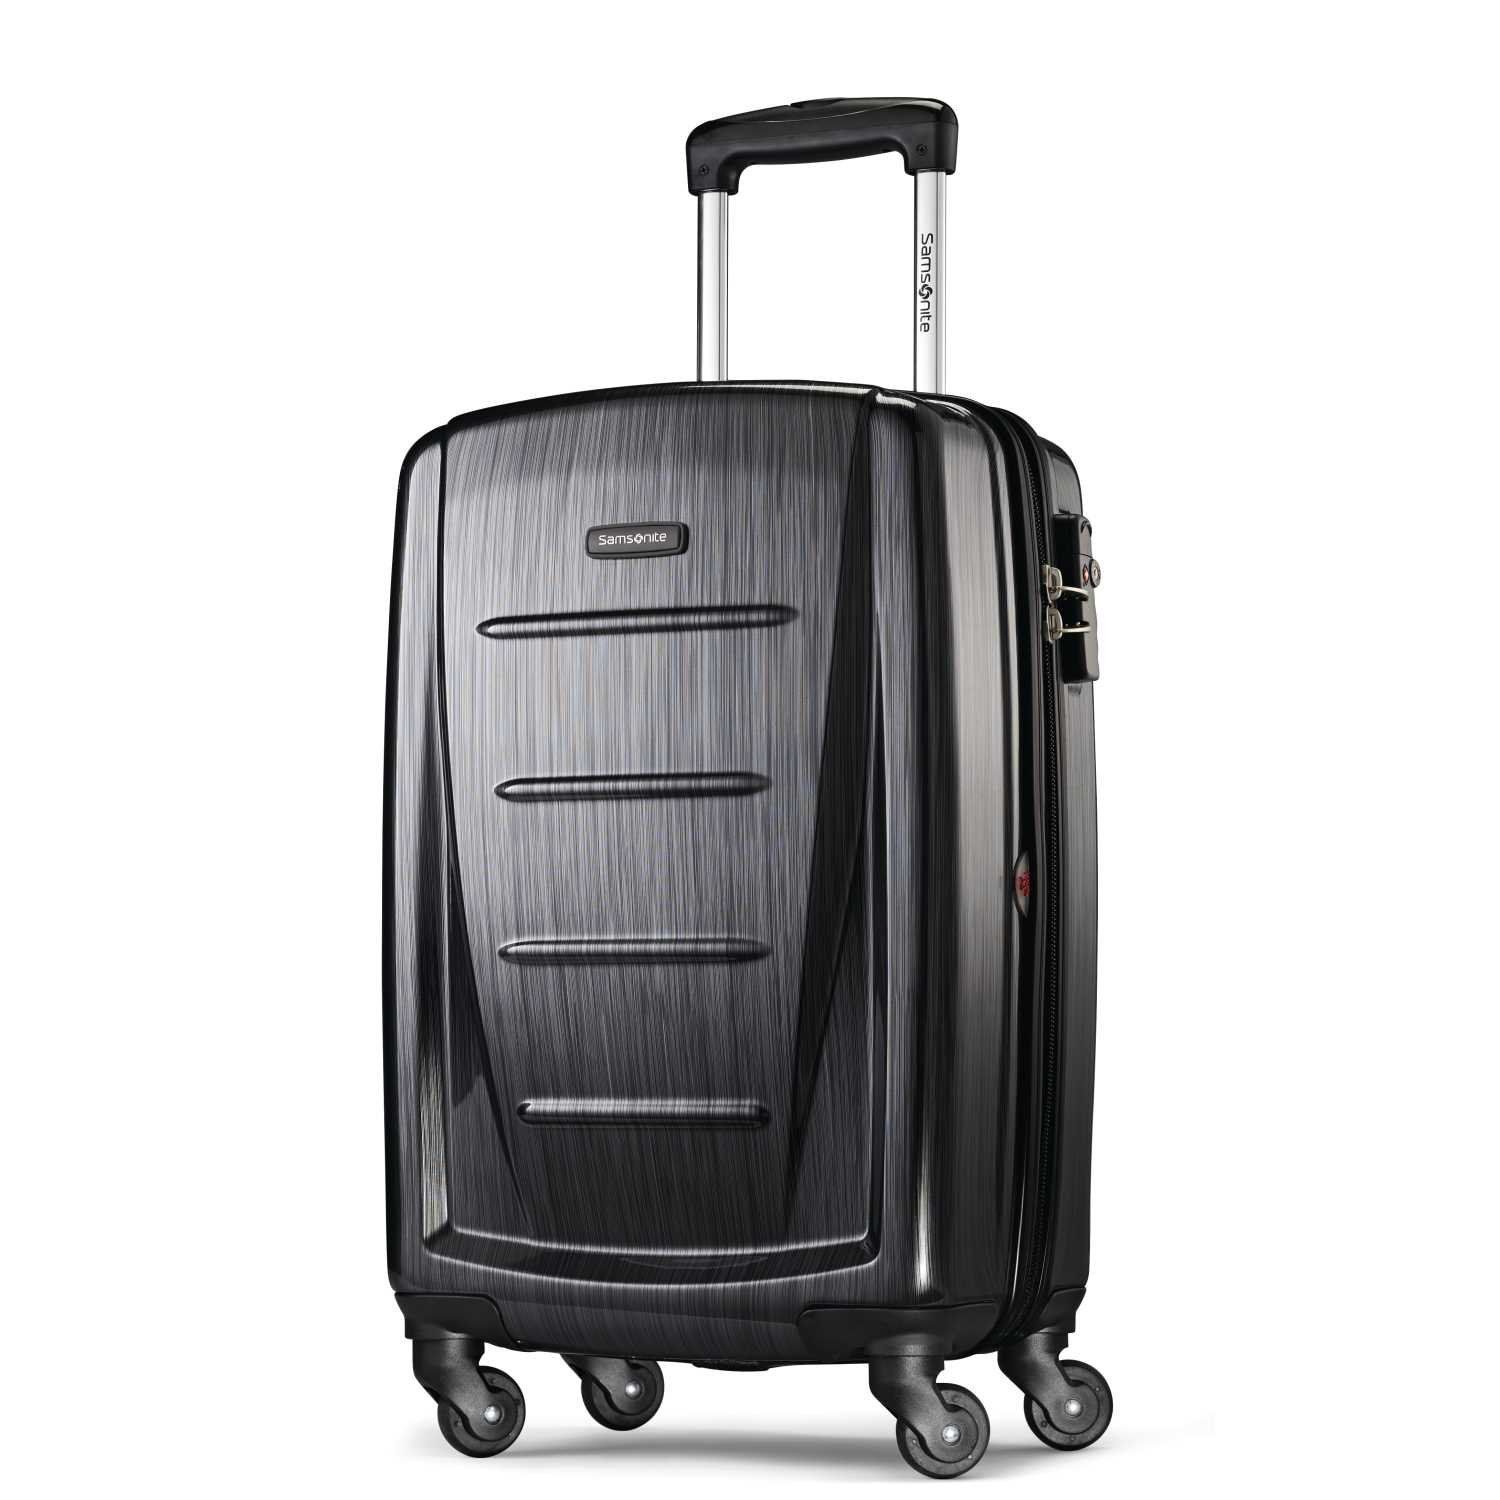 Samsonite Luggage Is $150 and Under 